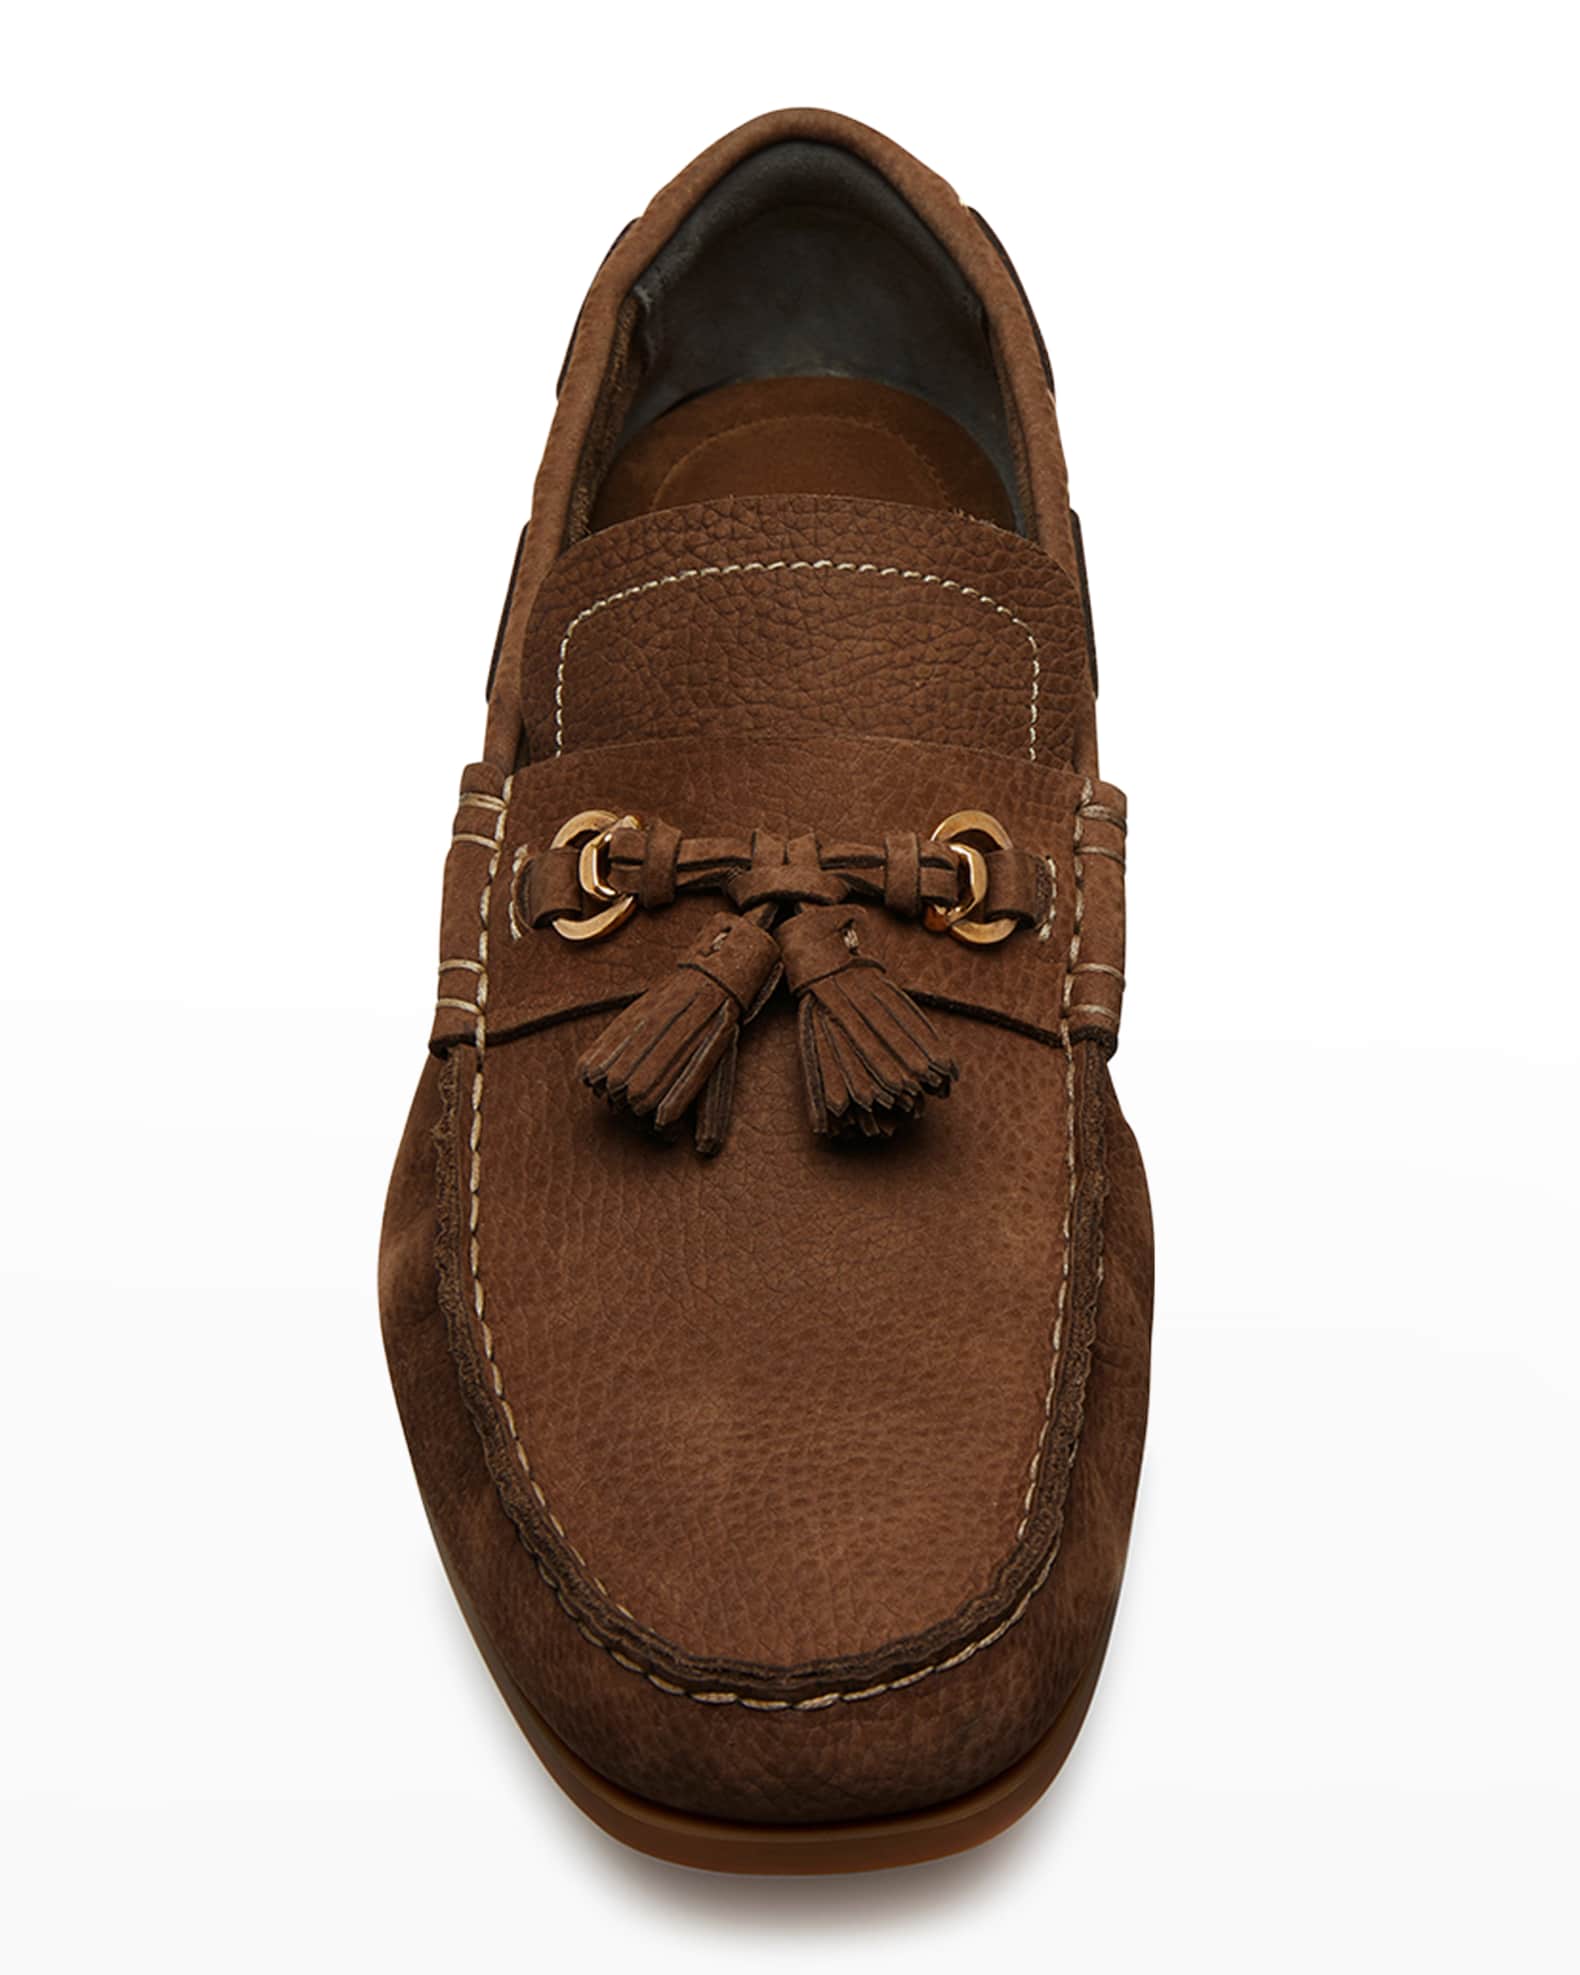 TOM FORD Men's Tassel Nubuck Leather Loafers | Neiman Marcus